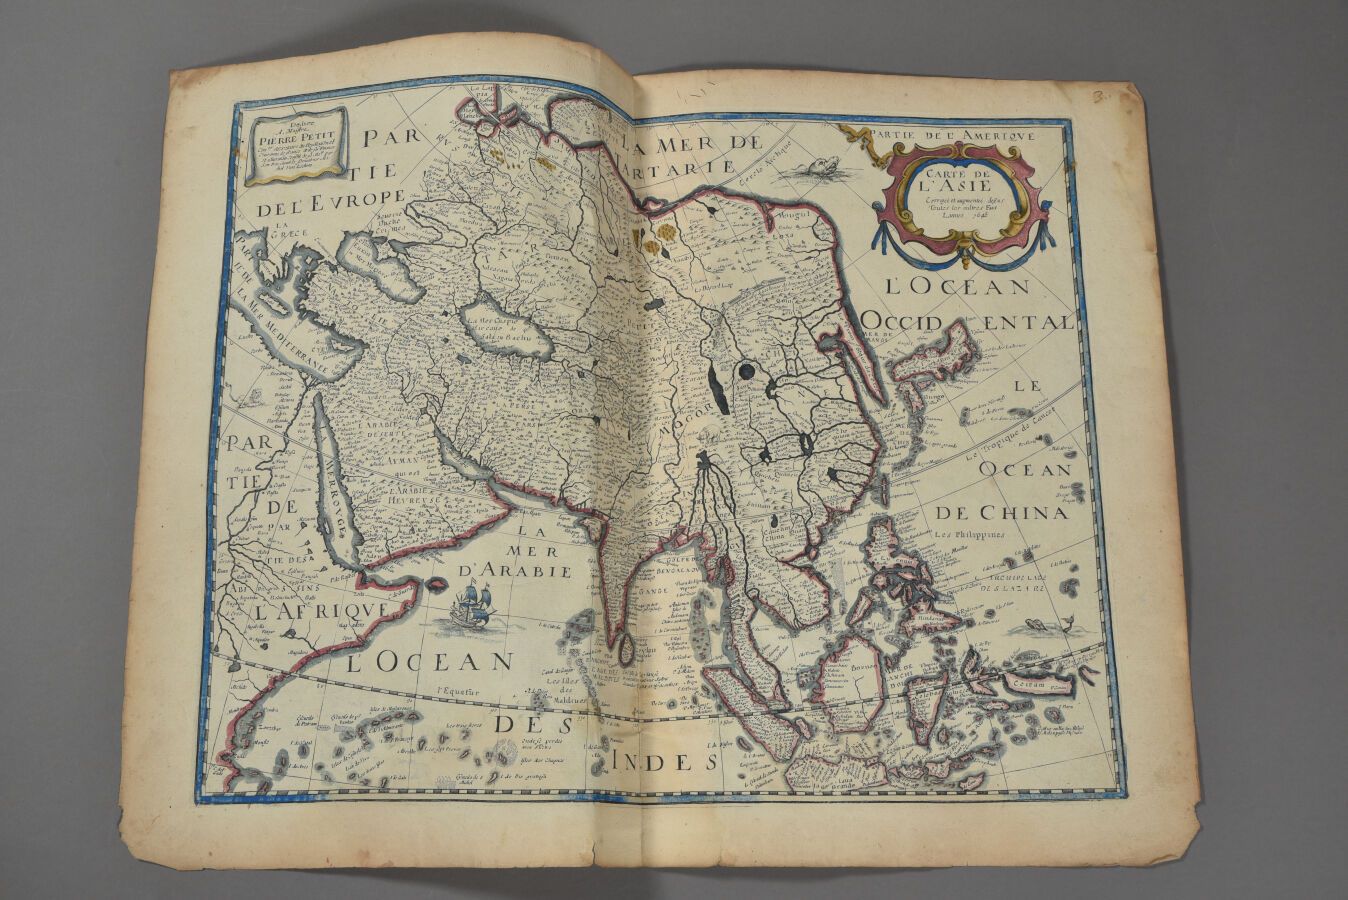 Null 17世纪的制图师。 
亚洲地图。 
1646. 
早期着色。 
双开本。 
一些缺陷（沿斜角的加固带，污损等）。